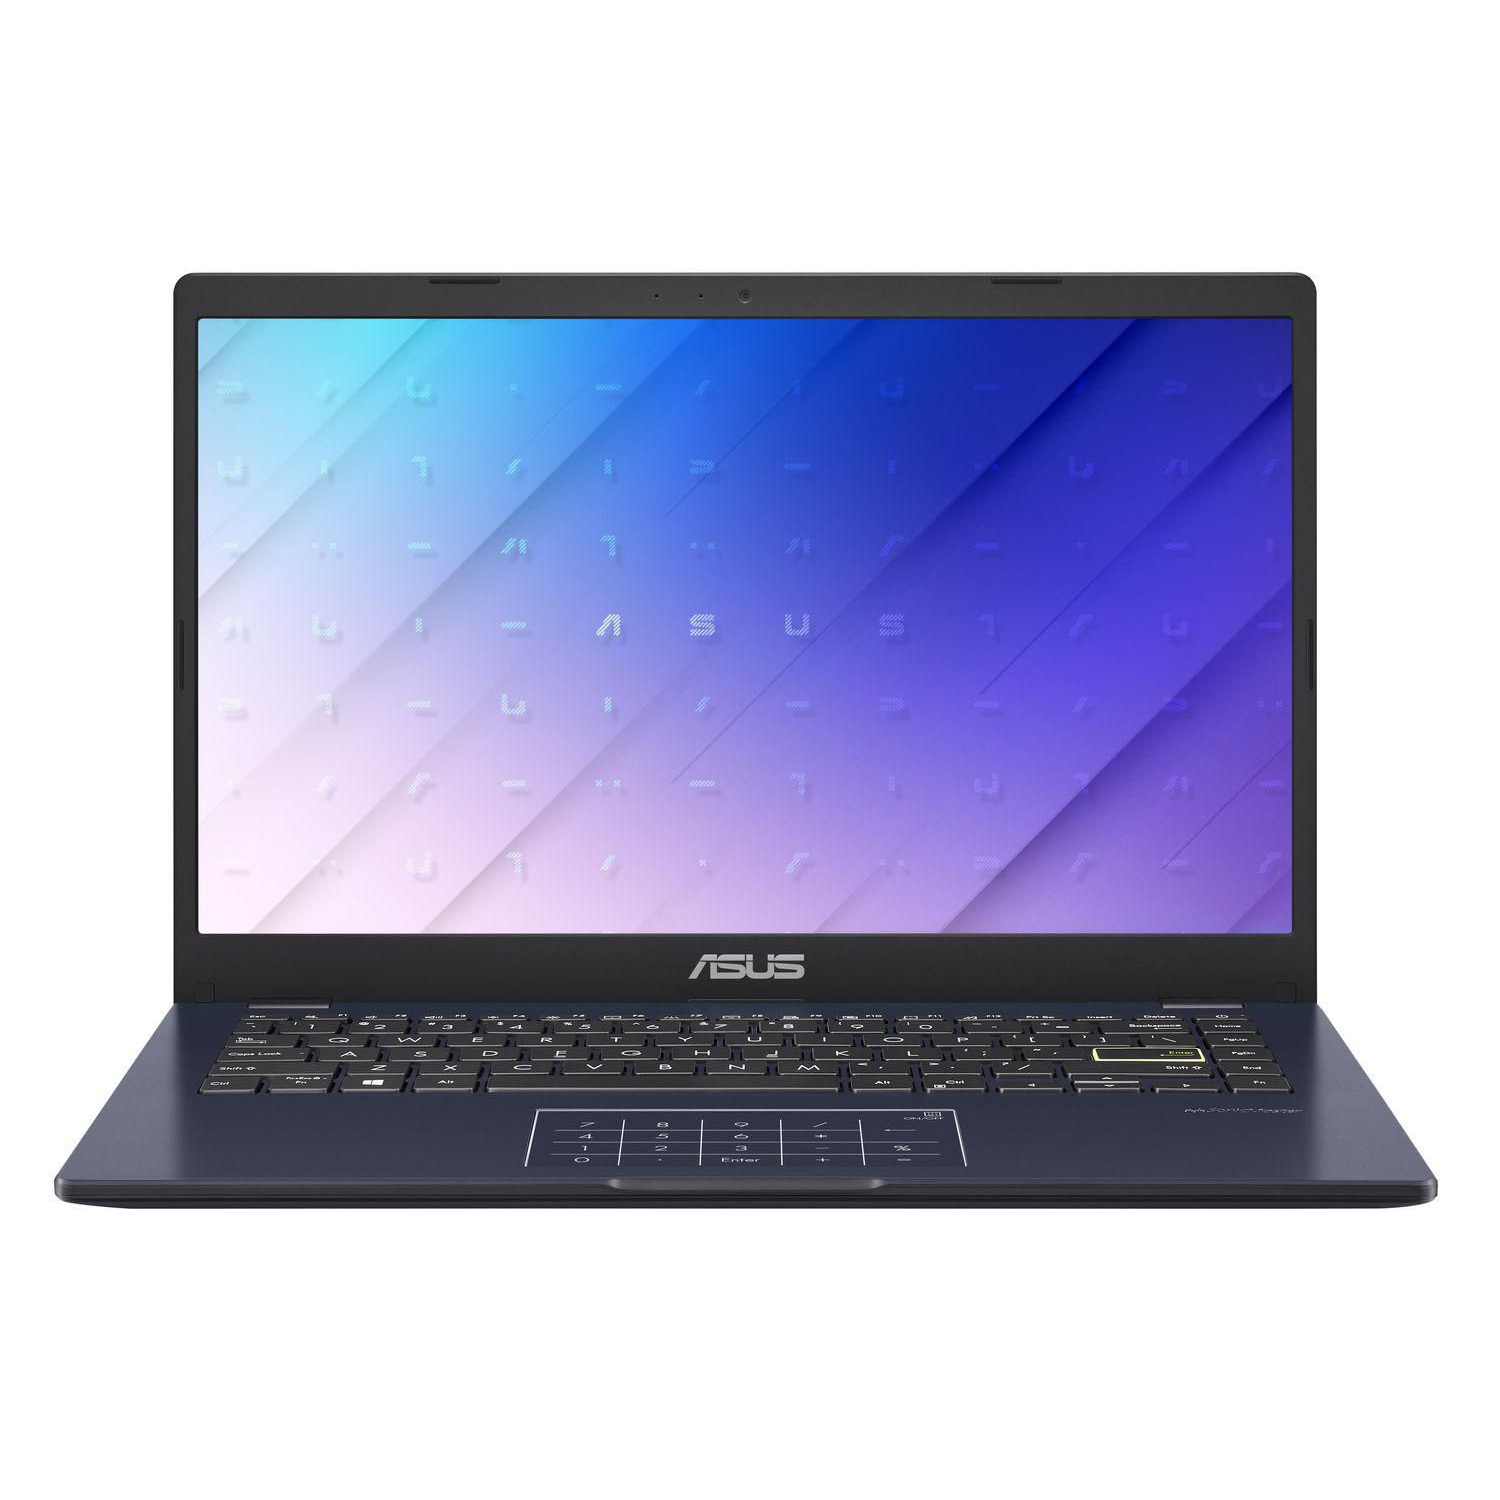 ASUS L410 14" Laptop - (Intel Celeron N4020/64GB /4GB RAM/Windows 10 S Mode) (L410MA-WS09-CB) -Star Black Open Box